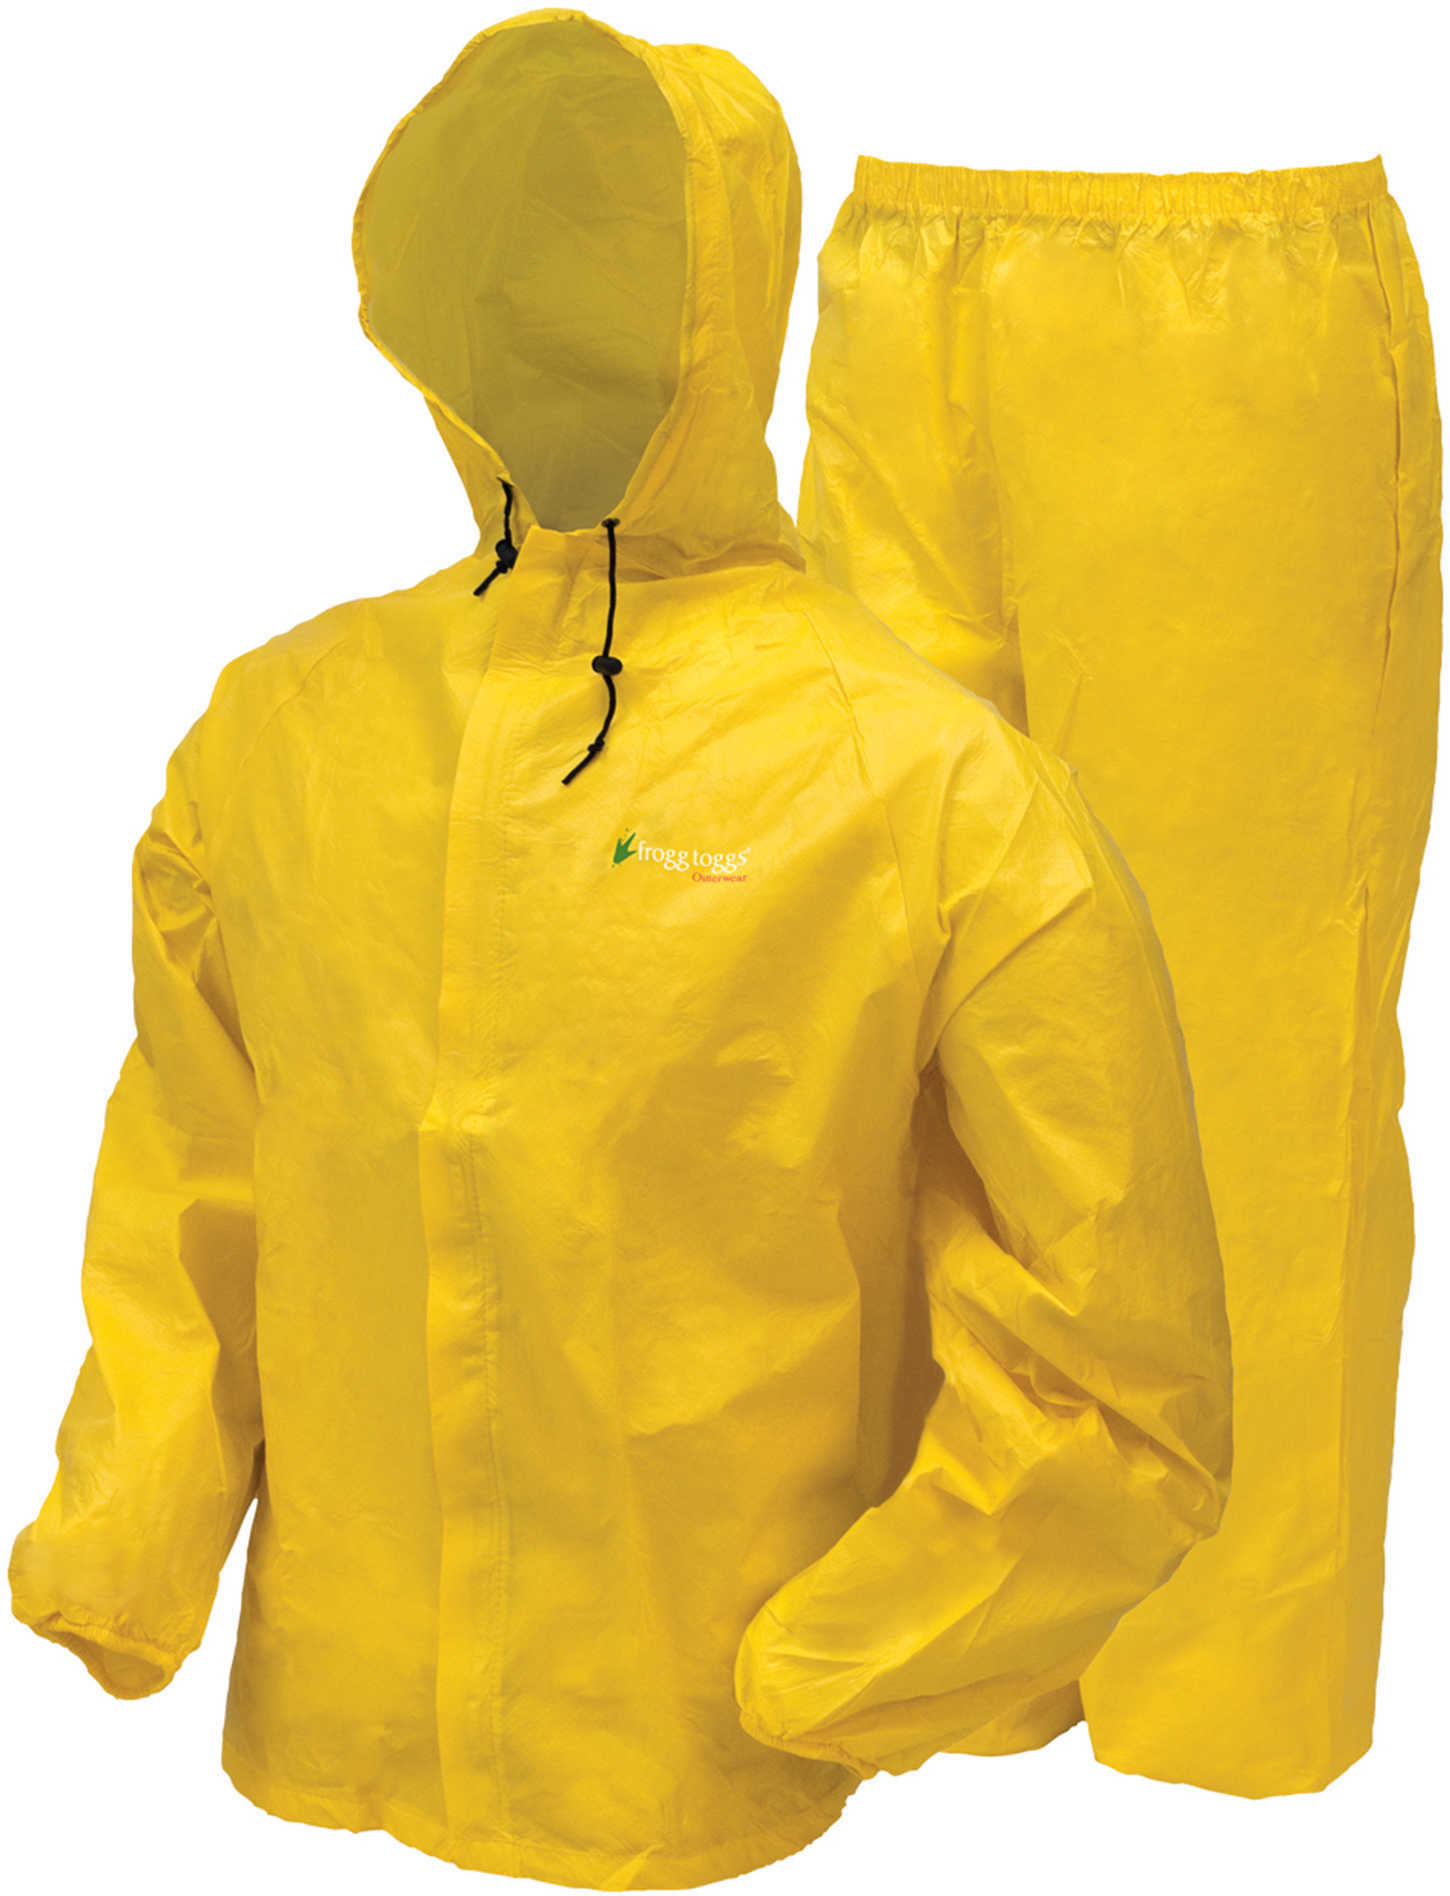 Frogg Toggs Ultra-Lite2 Rain Suit w/Stuff Sack X-Large, Yellow UL12104-08XL